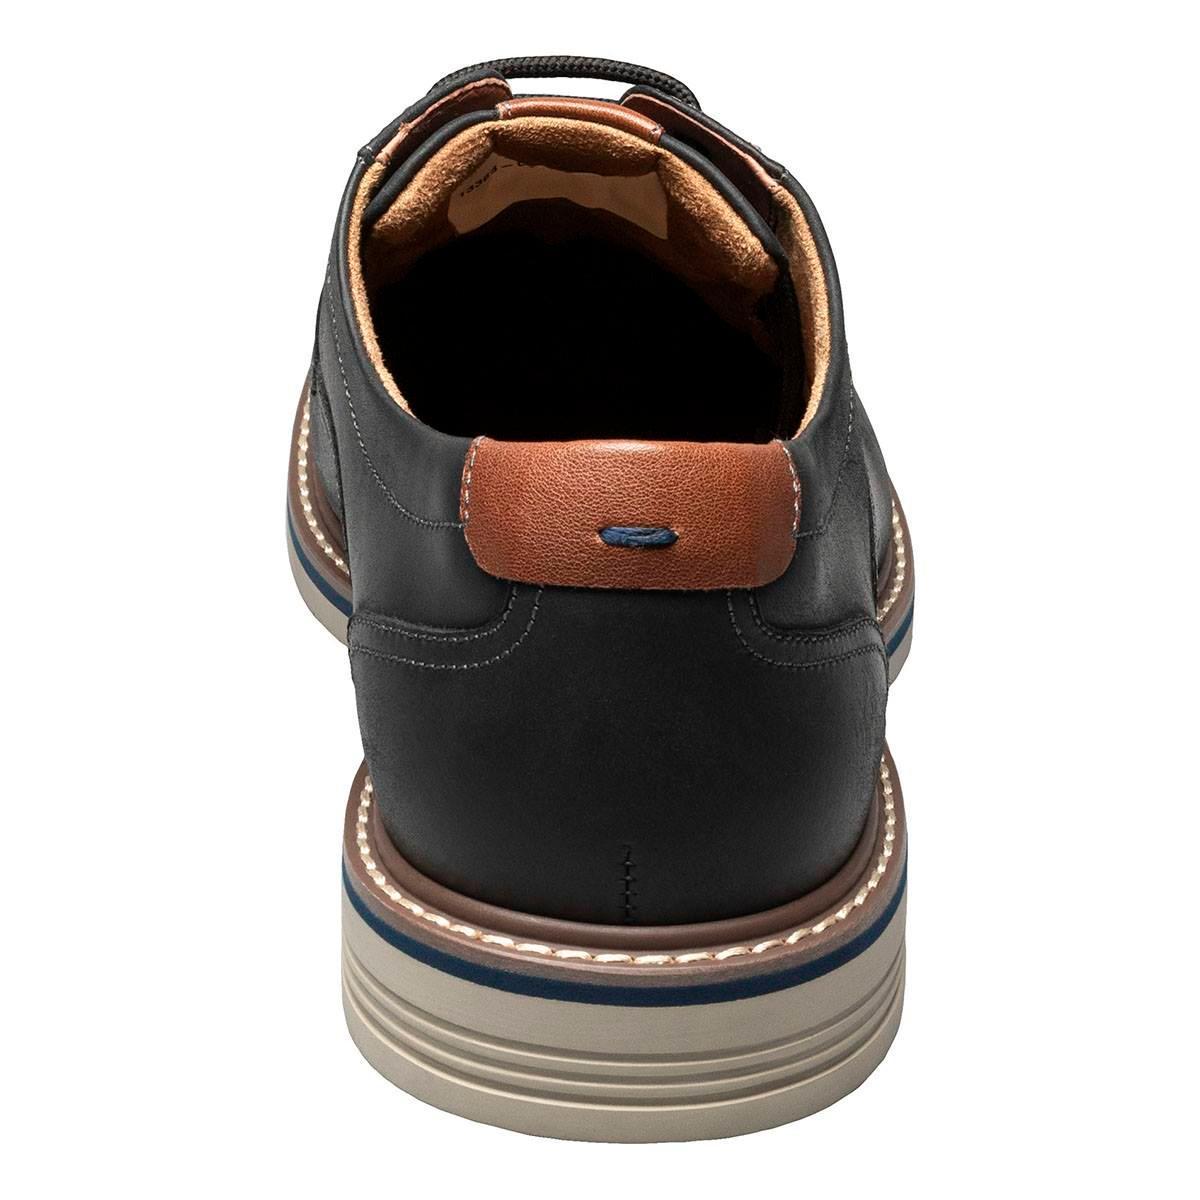 Big & Tall Florsheim Norwalk CapToe Oxford Shoes Product Image